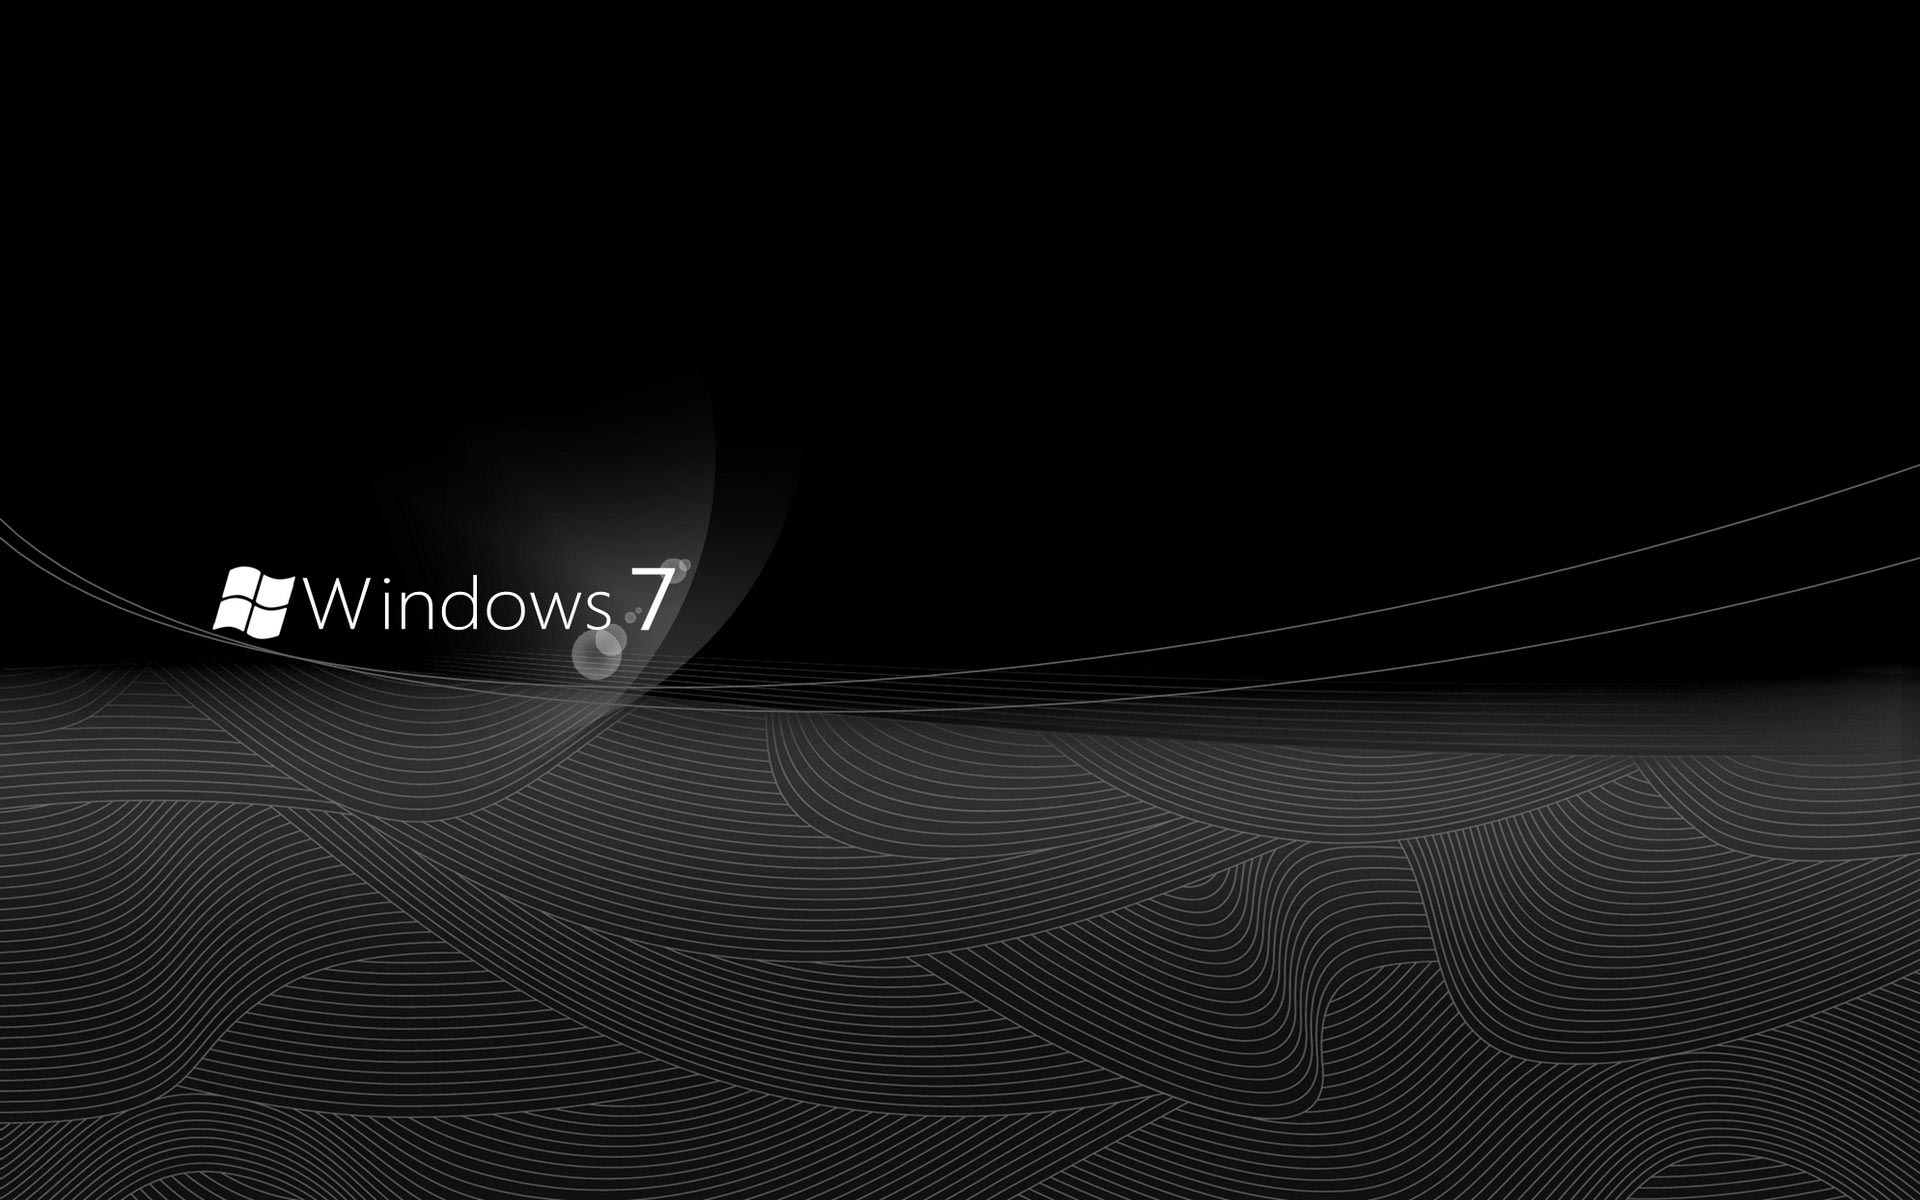 Windows Elegant Black Desktop Wallpaper And Make This For